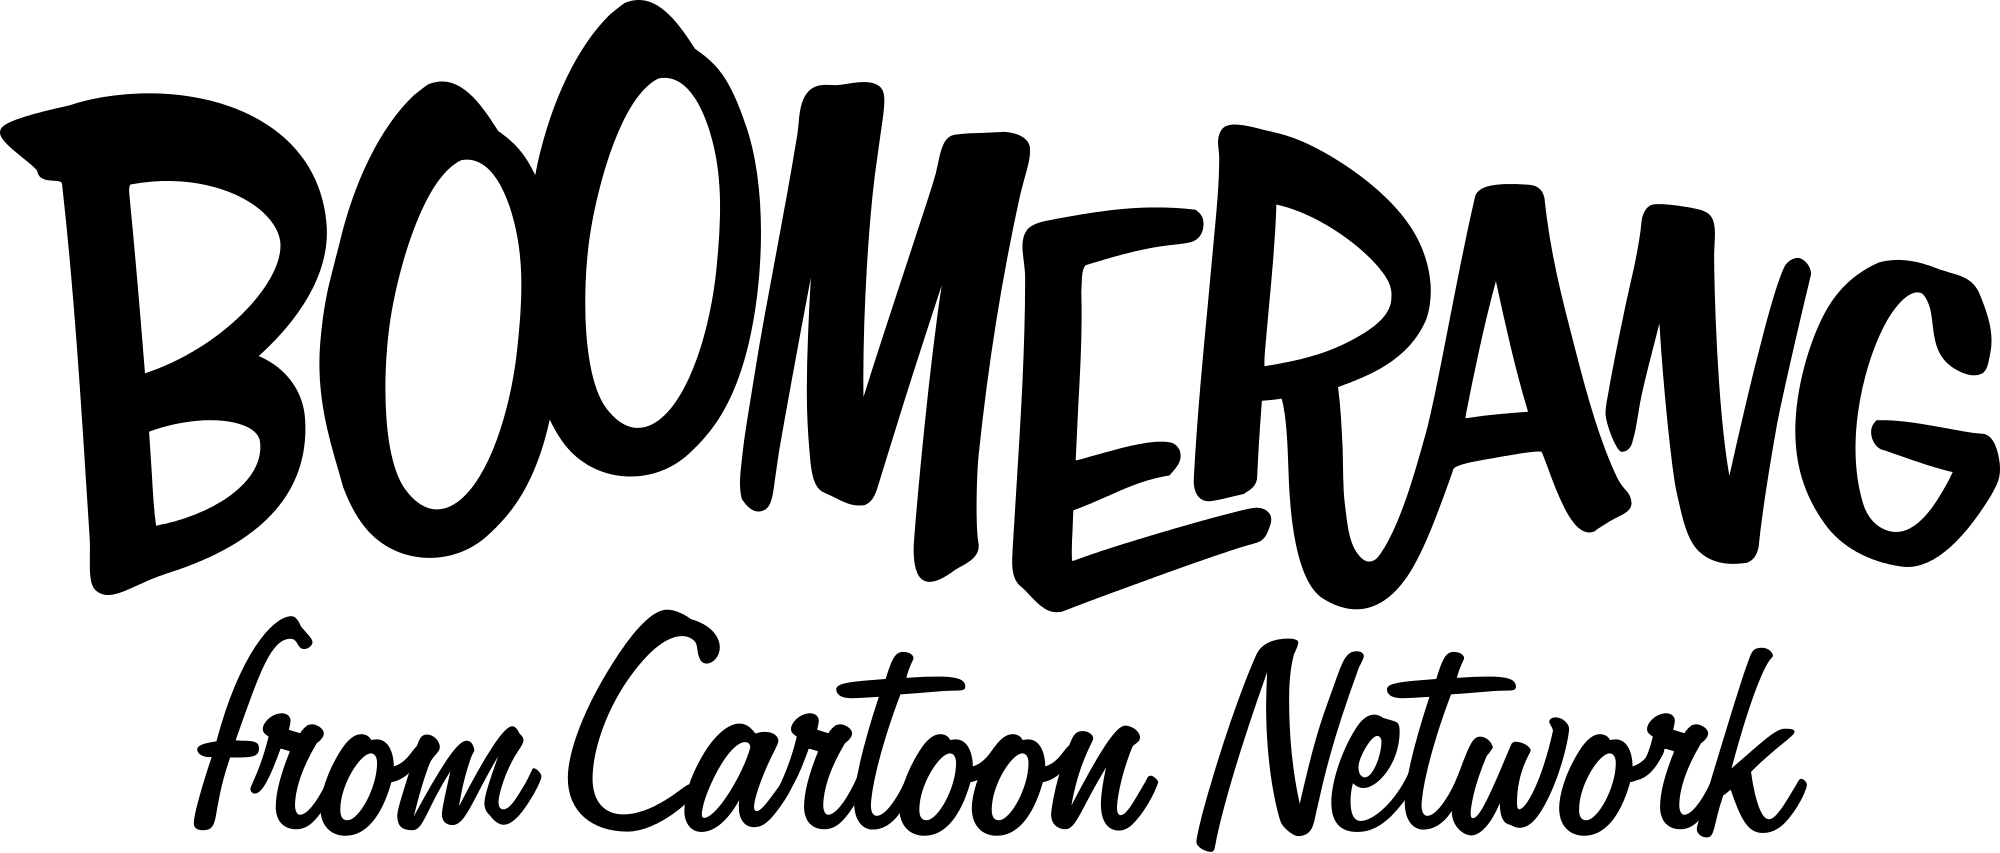 Boomerang Cartoon Network 2000 Logo - File:Boomerang from Cartoon Network logo.svg - Wikimedia Commons